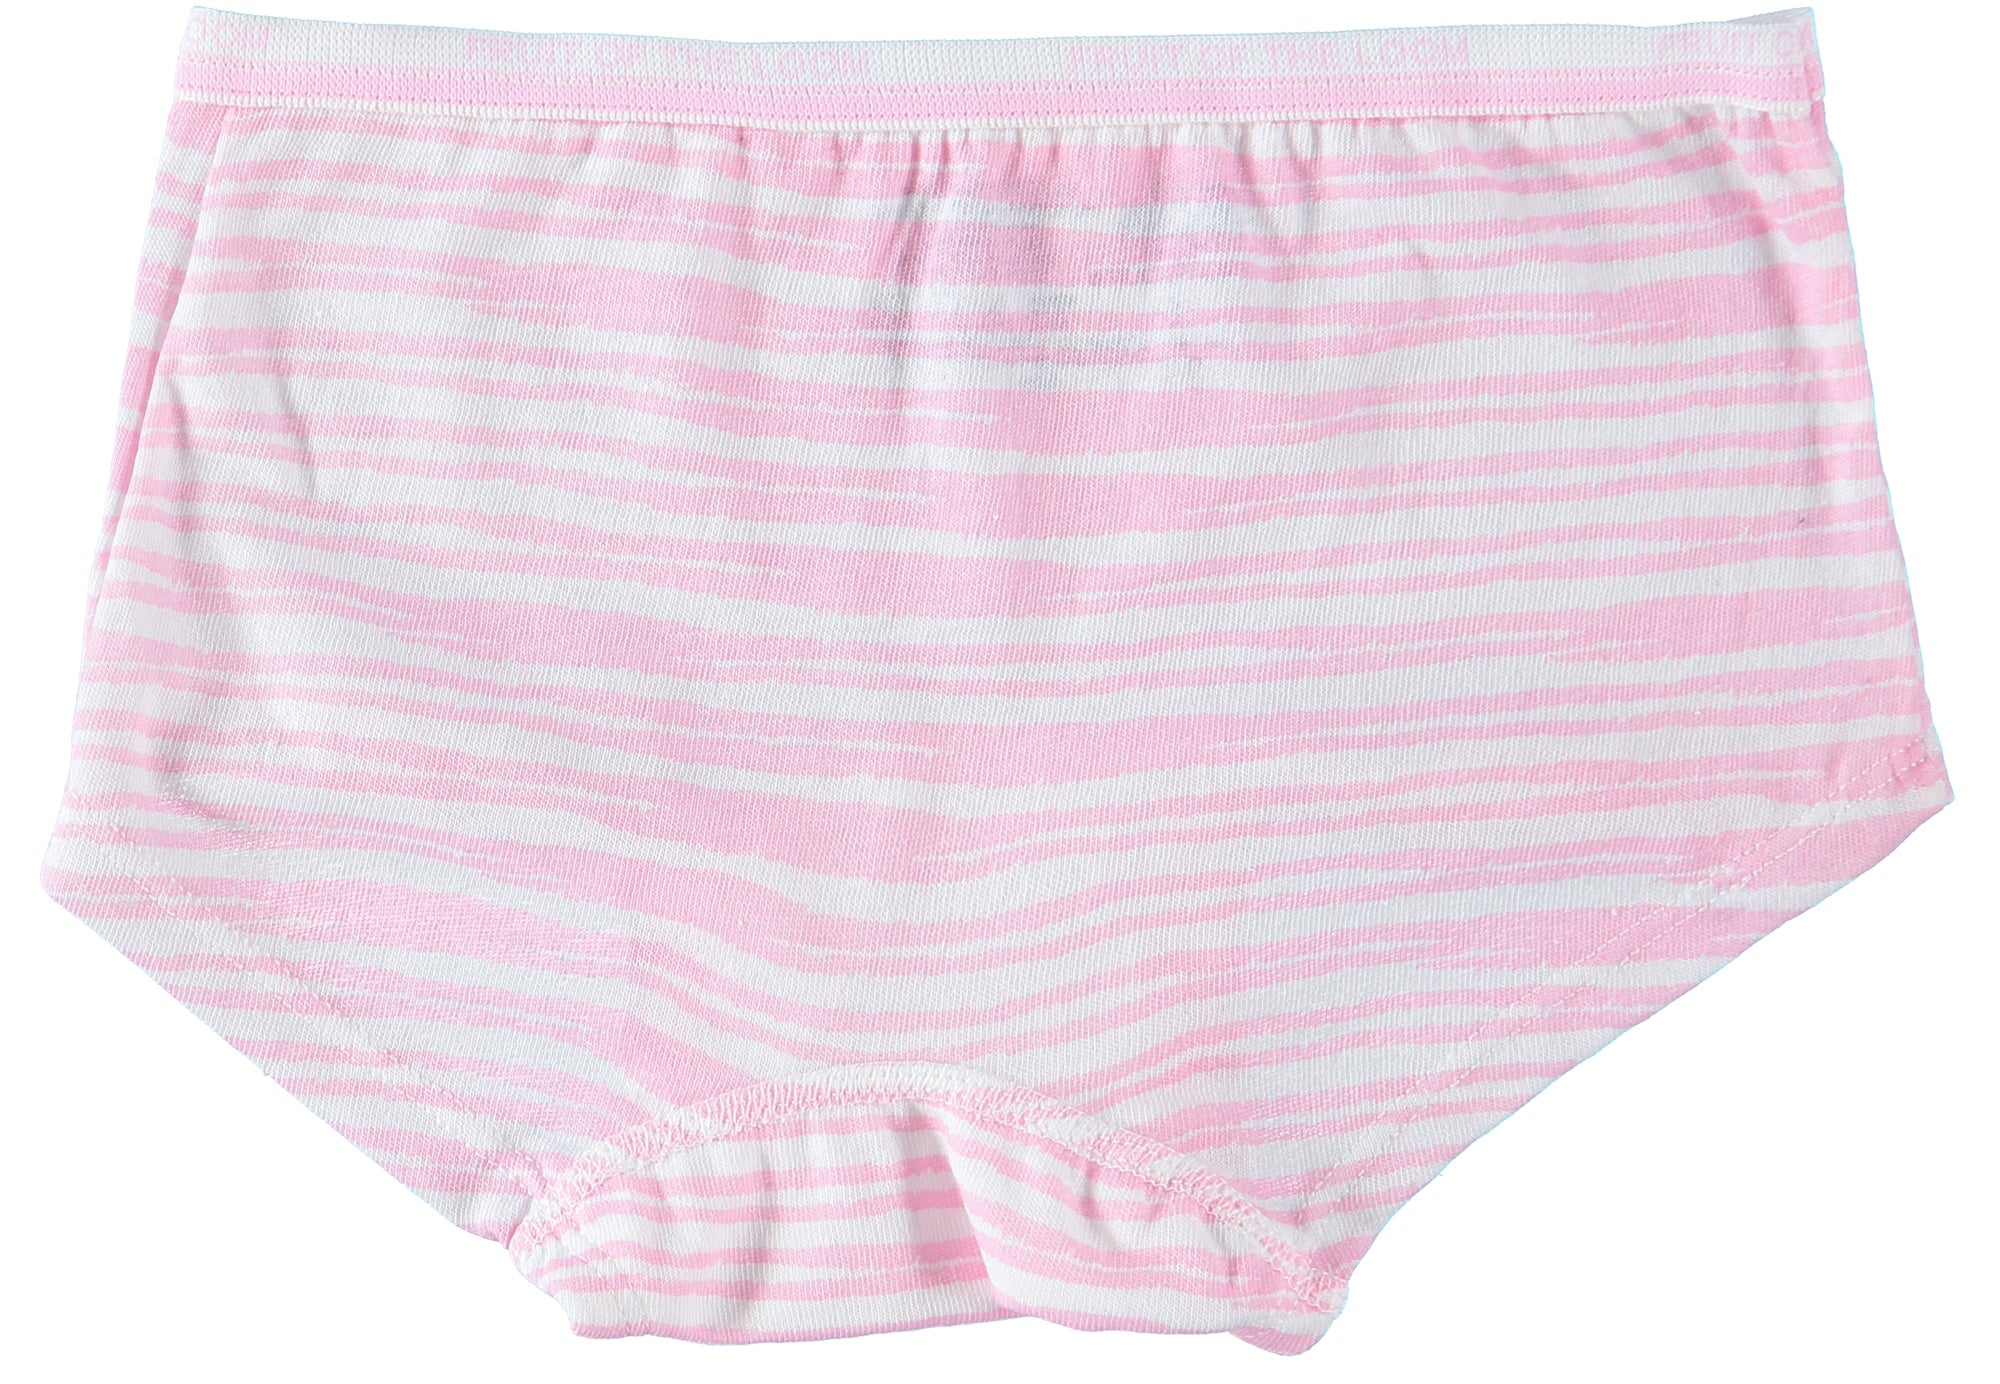 Fruit of the Loom Girls 6-16 Boyshort Underwear, 6 Pack